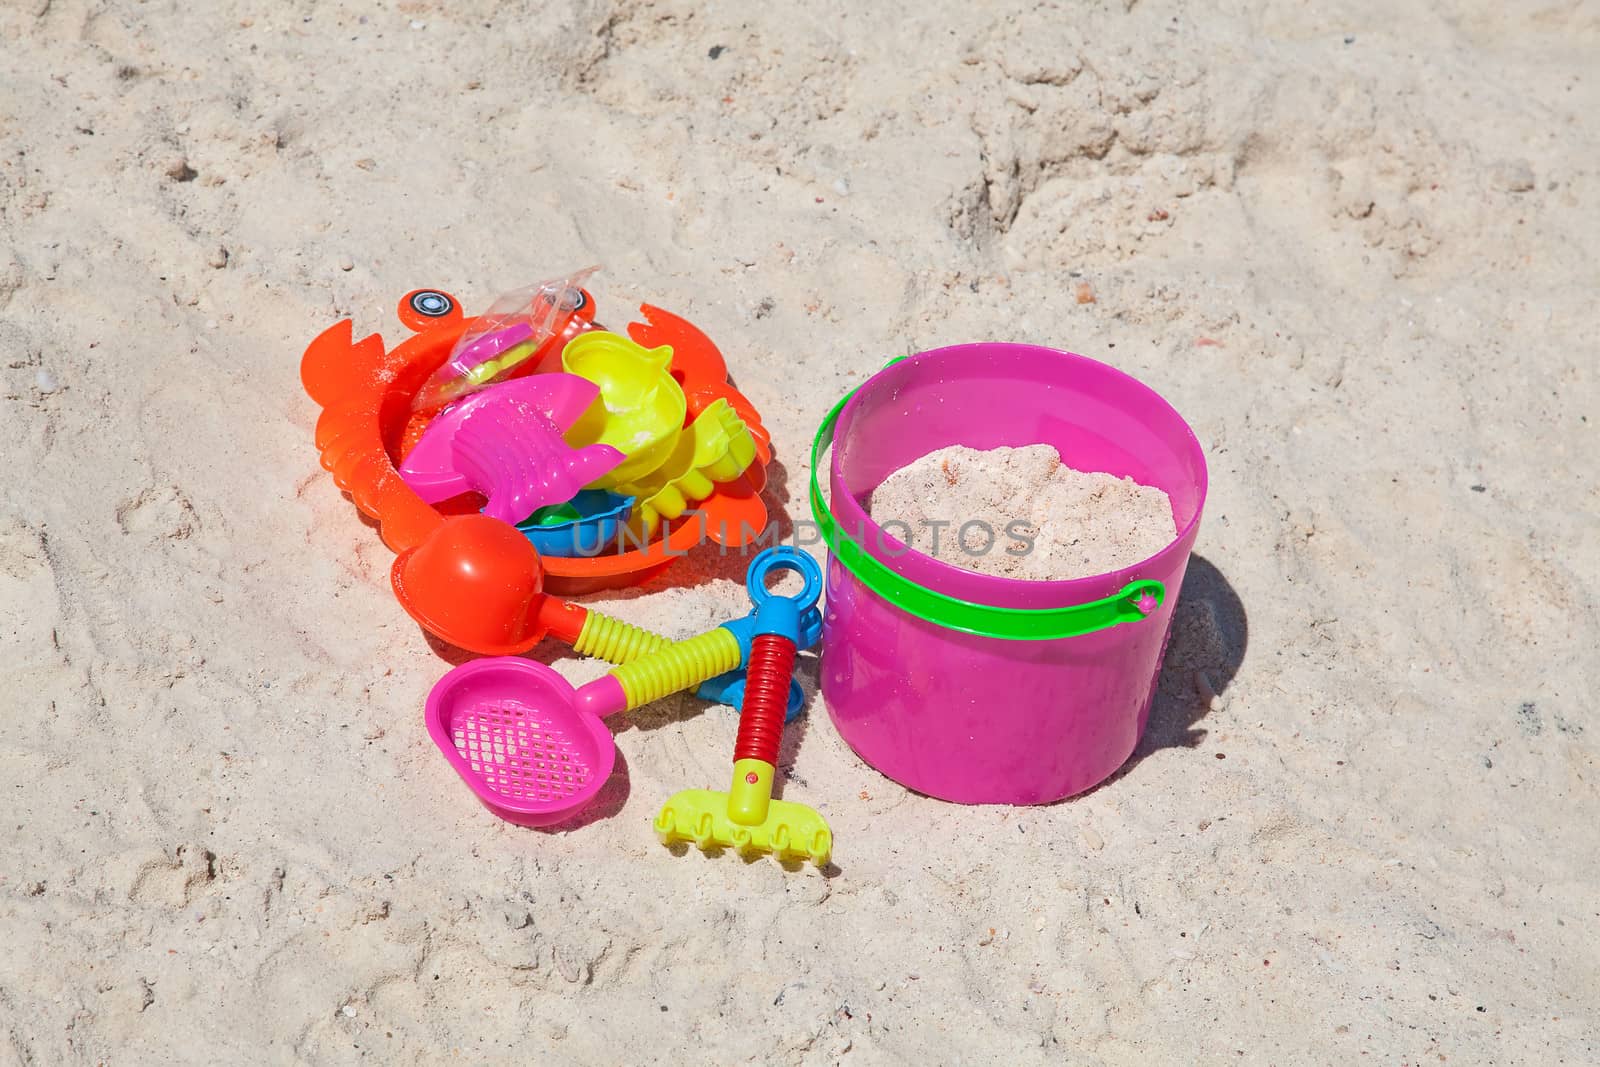 Bright plastic toys on a sandy beach